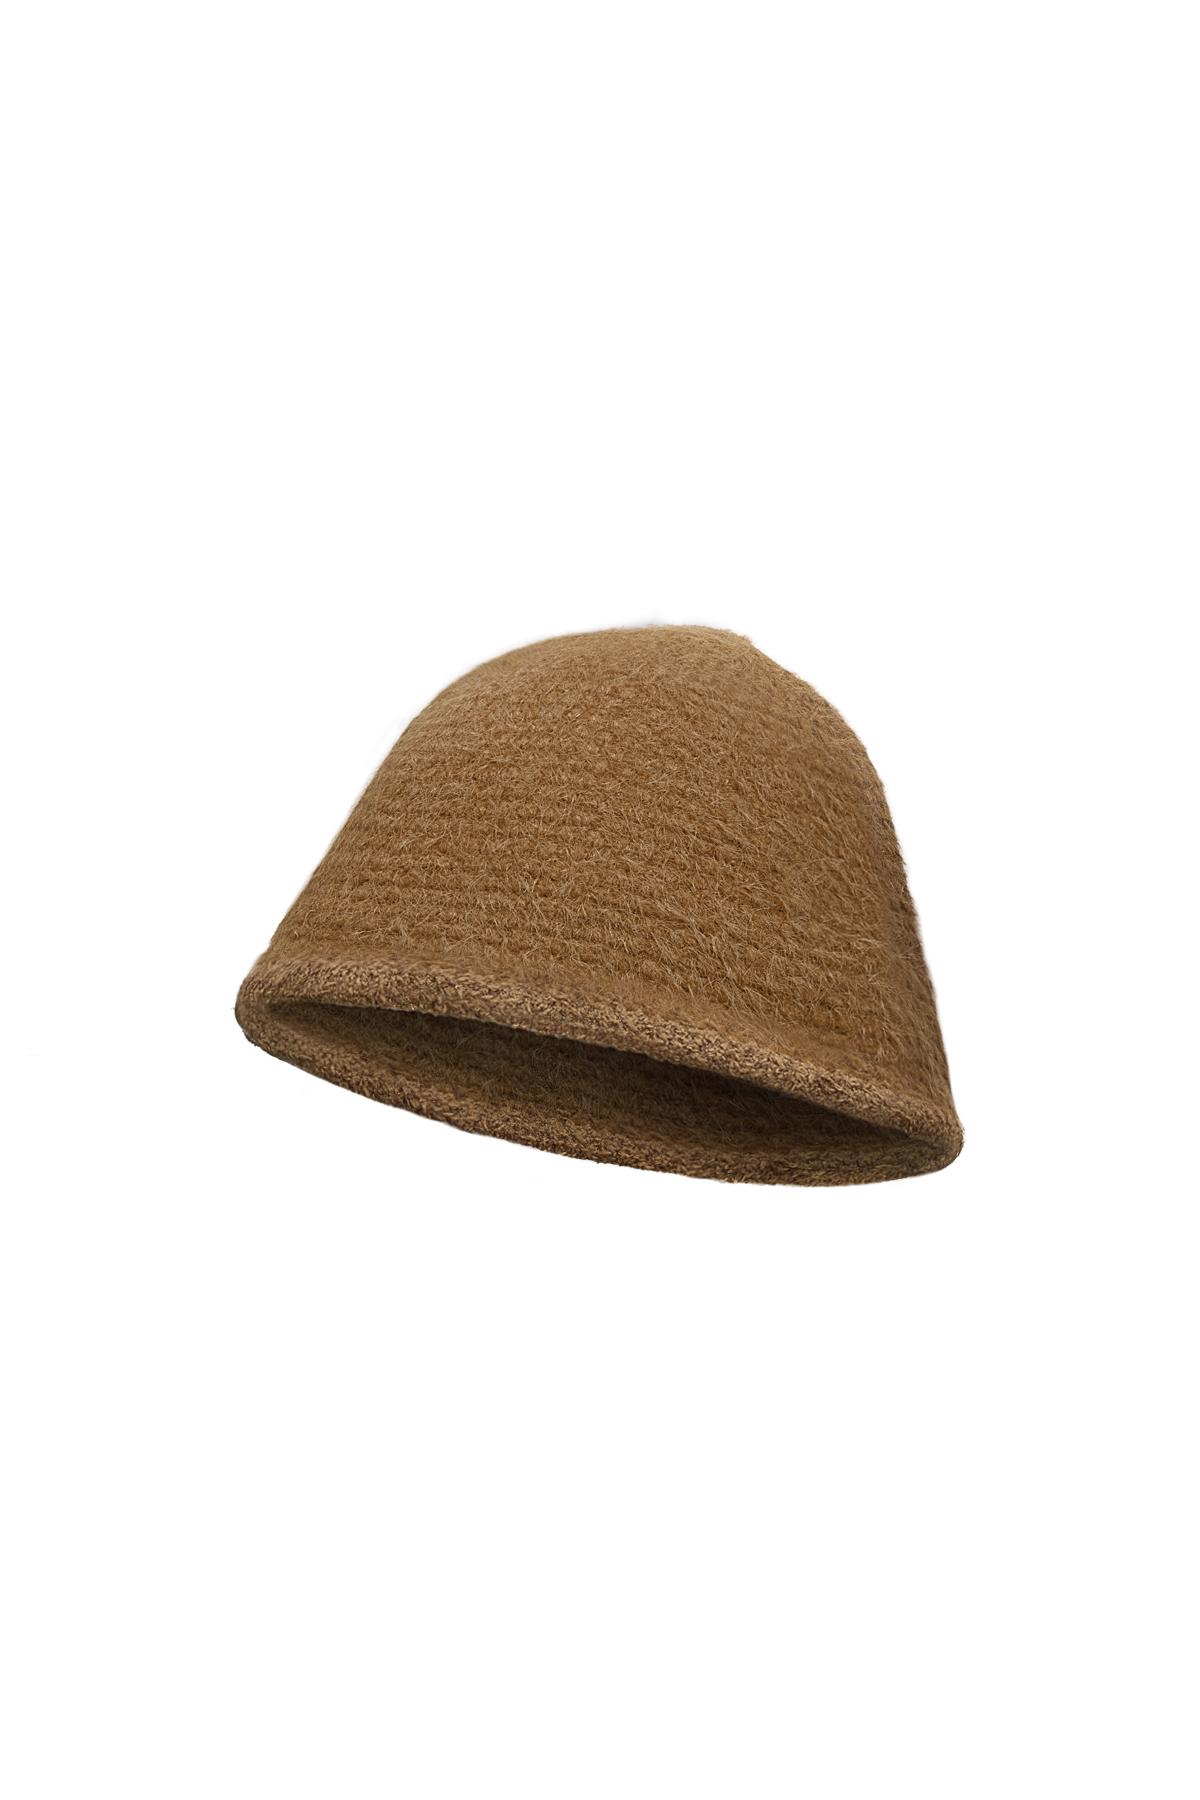 Fisherman's hat basic Camel Polyester h5 